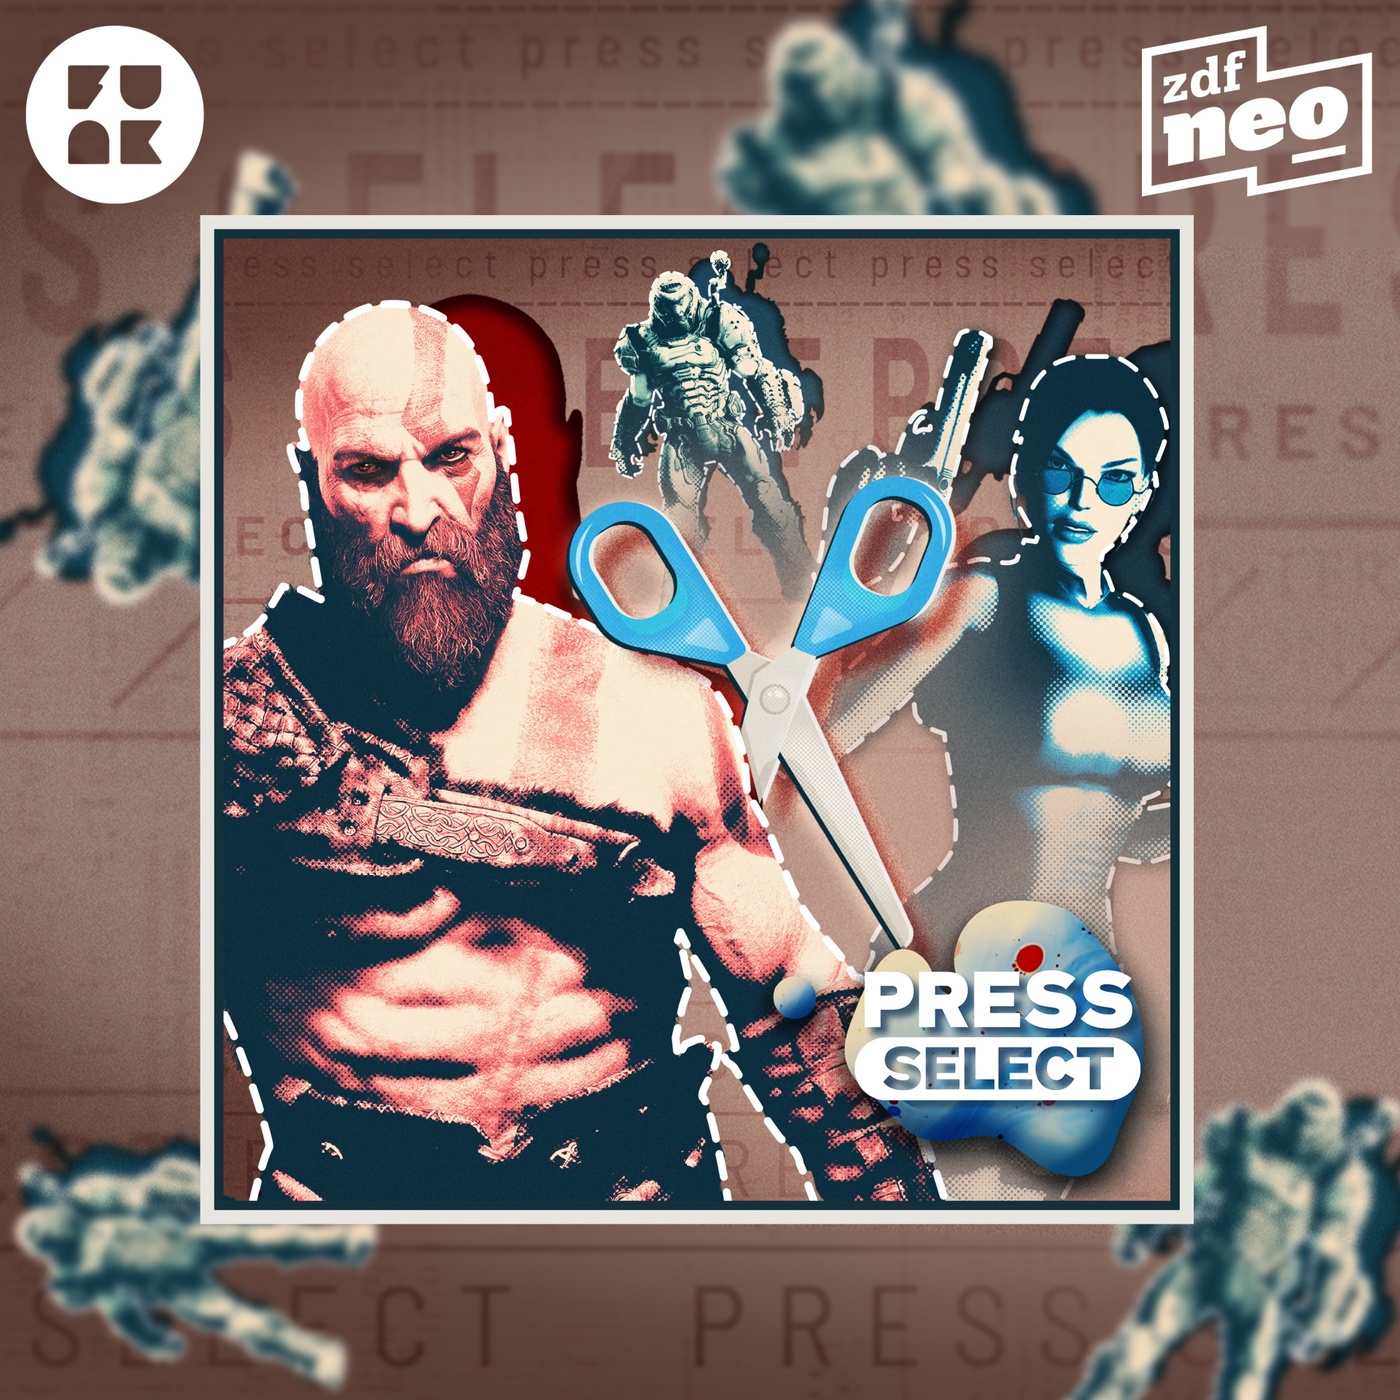 Wie man ein Franchise neu erfindet (feat. God of War Game Director Eric Williams) | Press Select #19